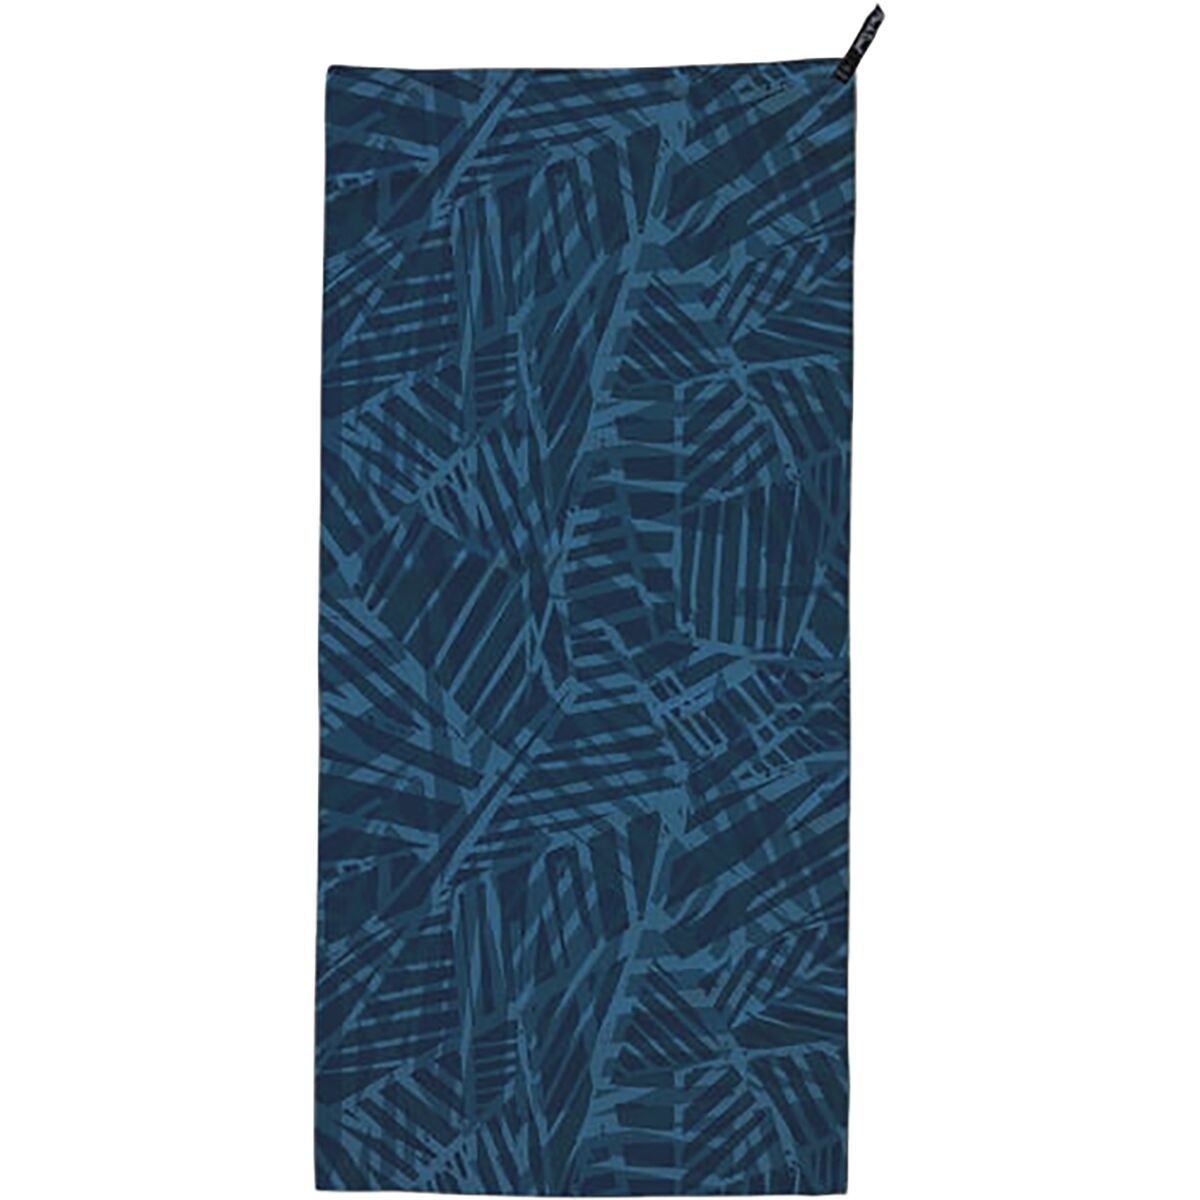 The blue botanical printed Packtowl towel